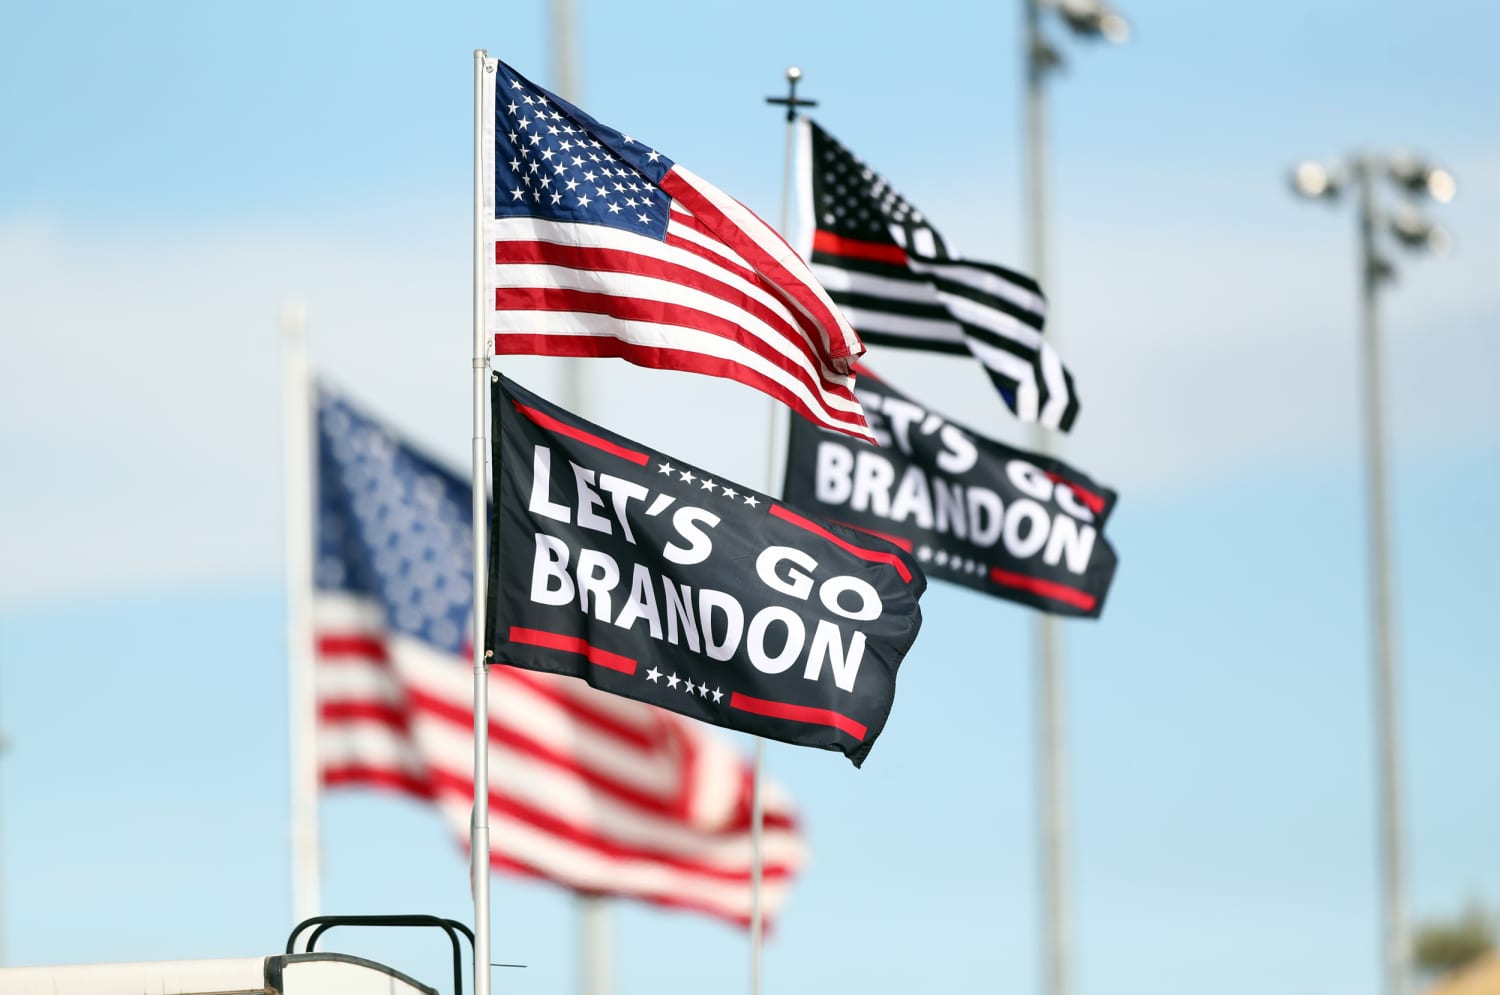 https://media-cldnry.s-nbcnews.com/image/upload/newscms/2021_45/3517981/211108-lets-go-brandon-flags-jm-1947.jpg